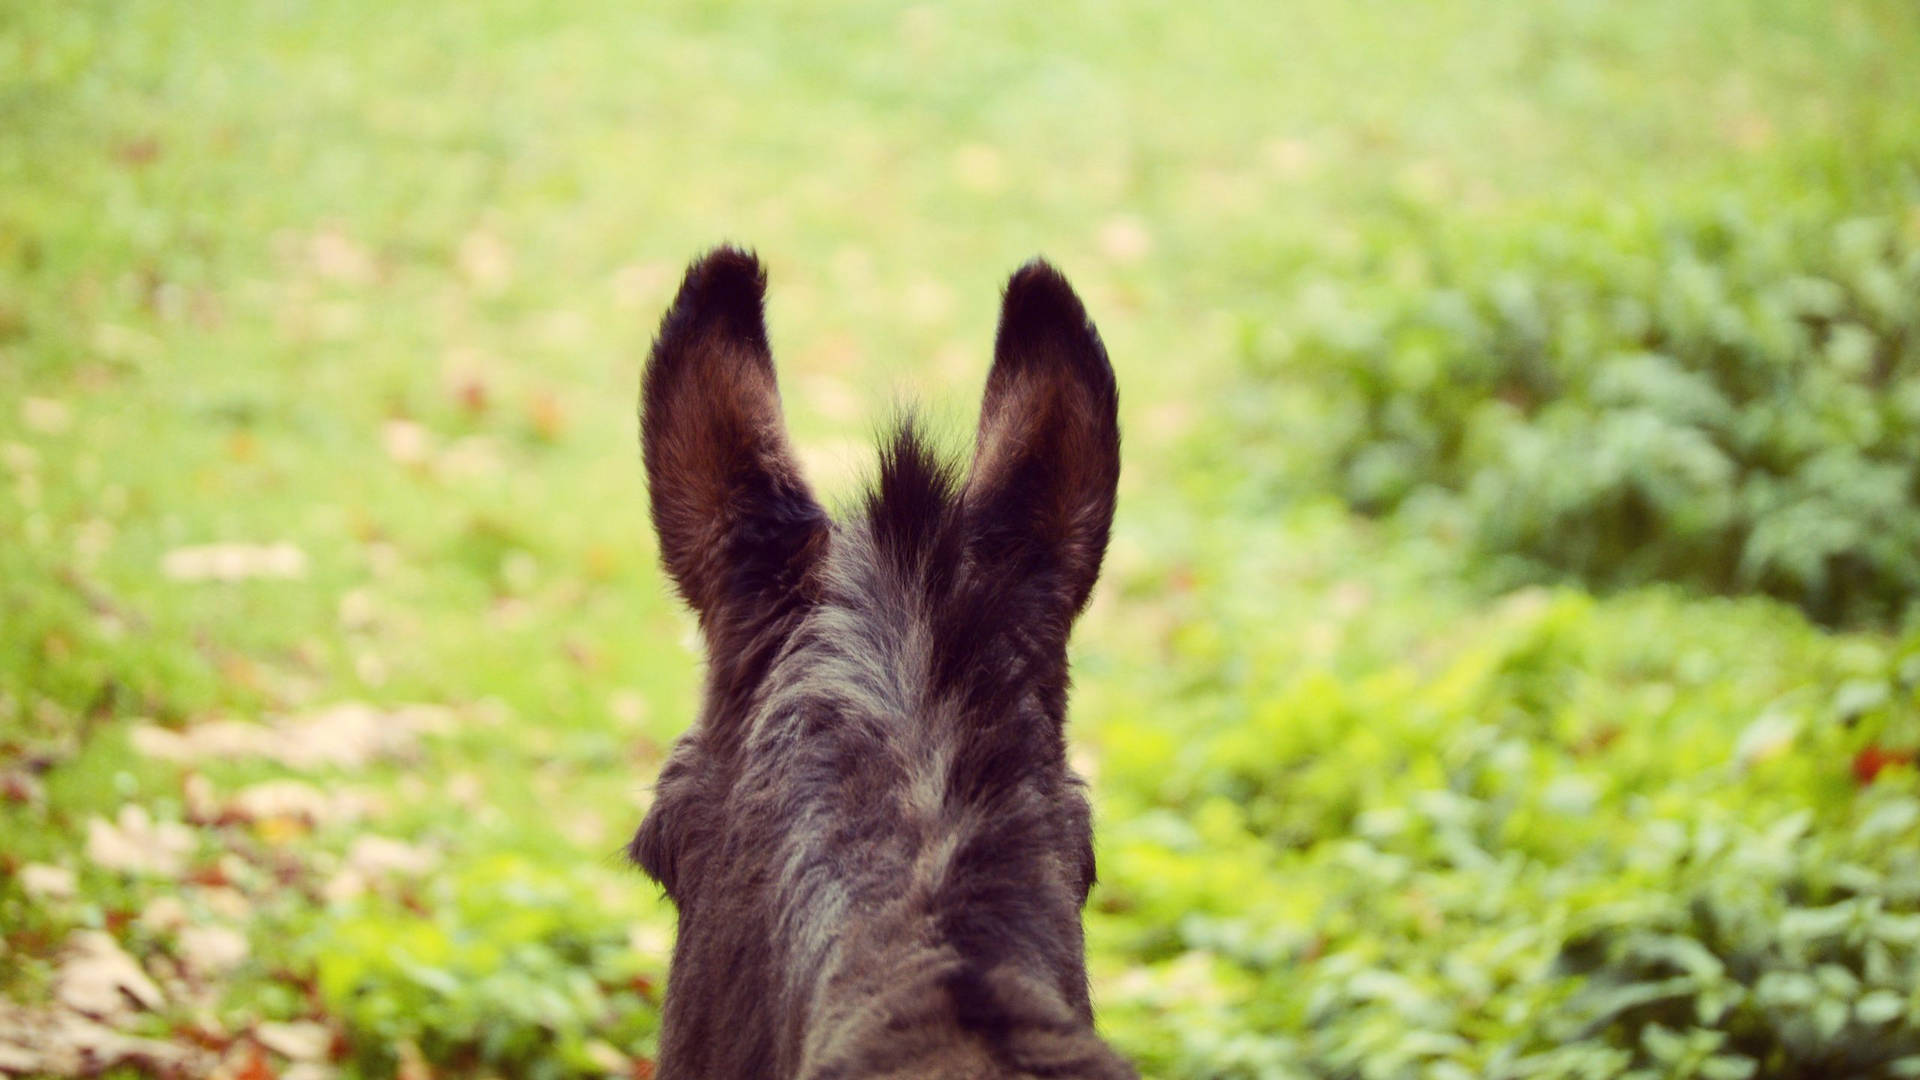 Donkey Ears Up